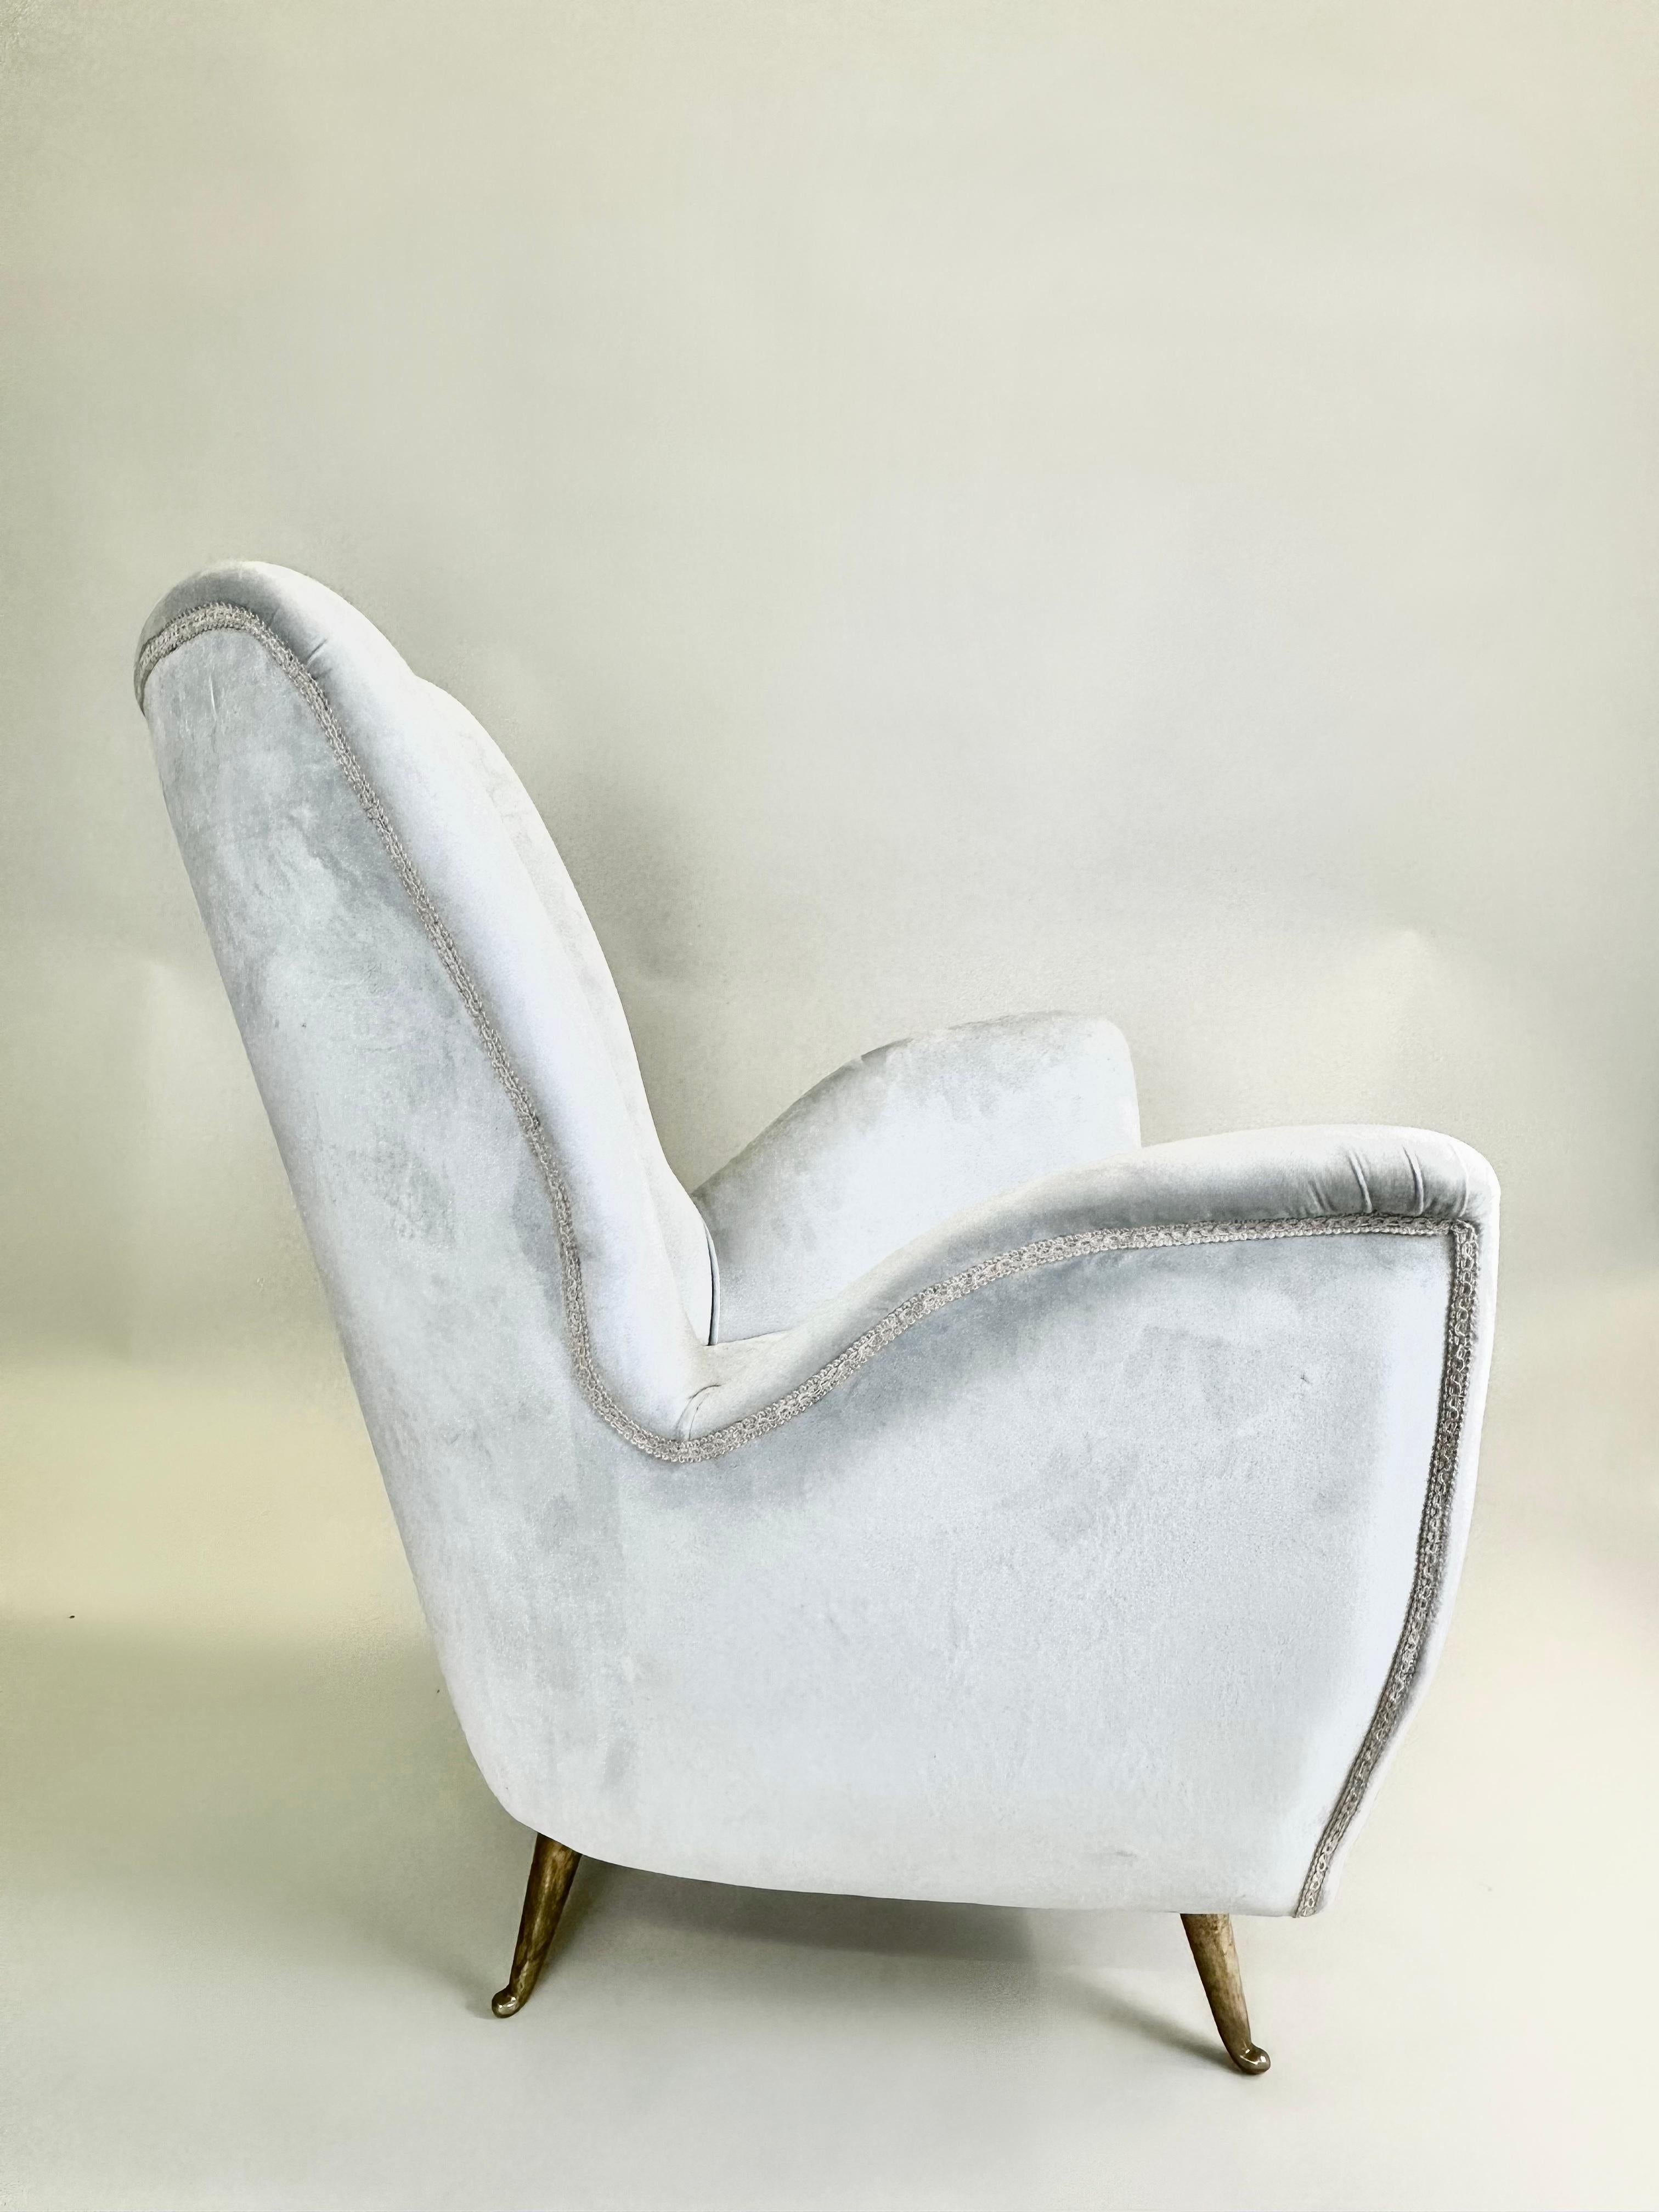 Pair of Italian Mid-Century Modern Lounge Chairs by Isa Bergamo & Att Gio Ponti  For Sale 5